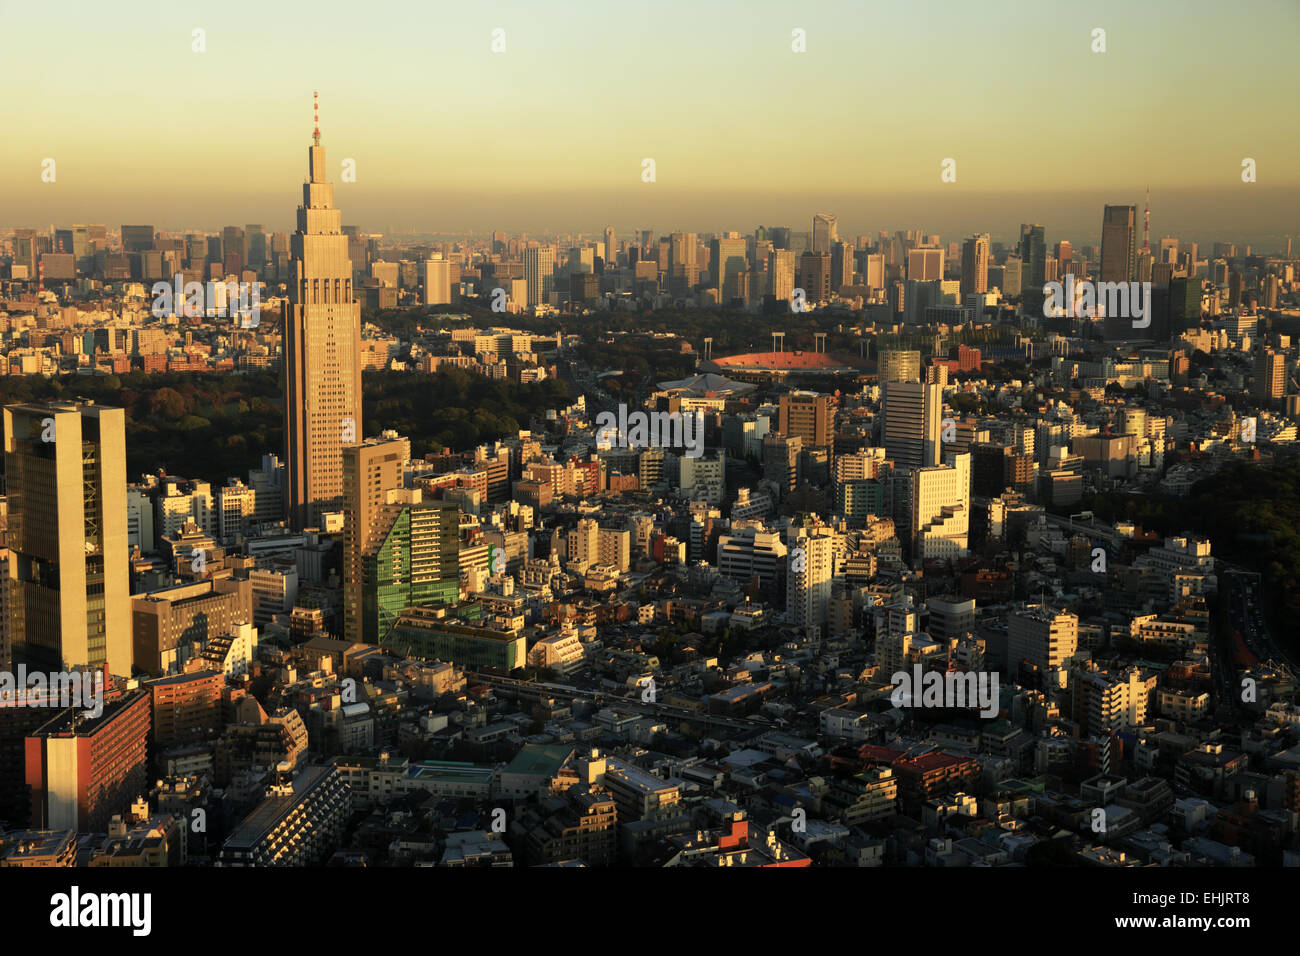 Skyline of of Shinjuku in Tokyo with NTT Docomo building under afternoon sunlight. Tokyo. Japan Stock Photo